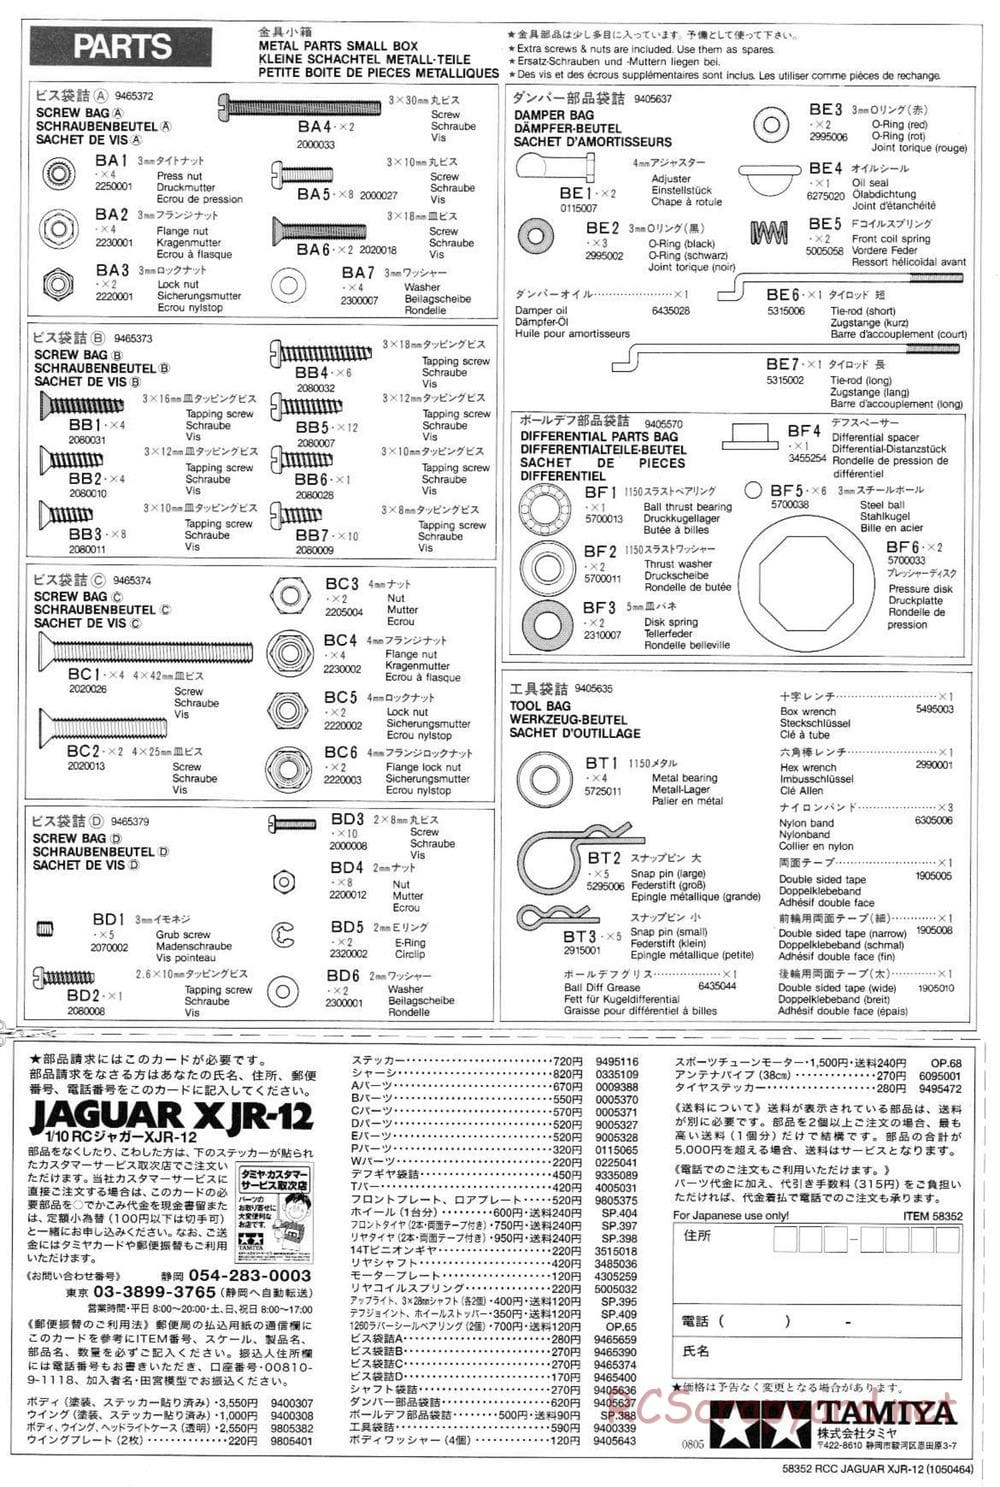 Tamiya - Jaguar XJR-12 Daytona Winner - Group-C Chassis - Manual - Page 20